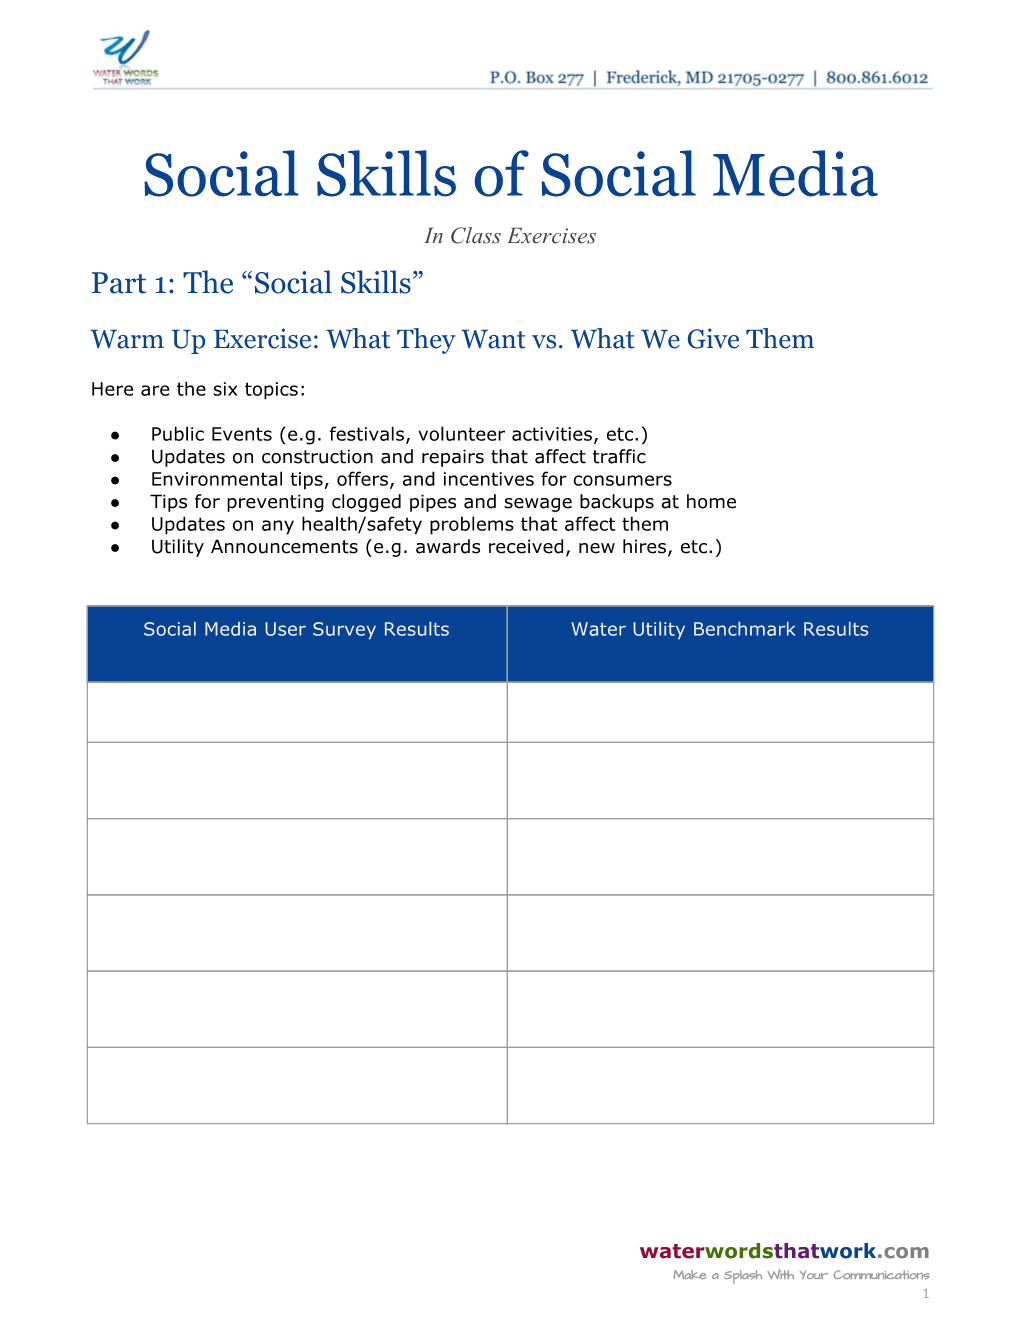 Social Skills of Social Media in Class Exercises Part 1: the “Social Skills”